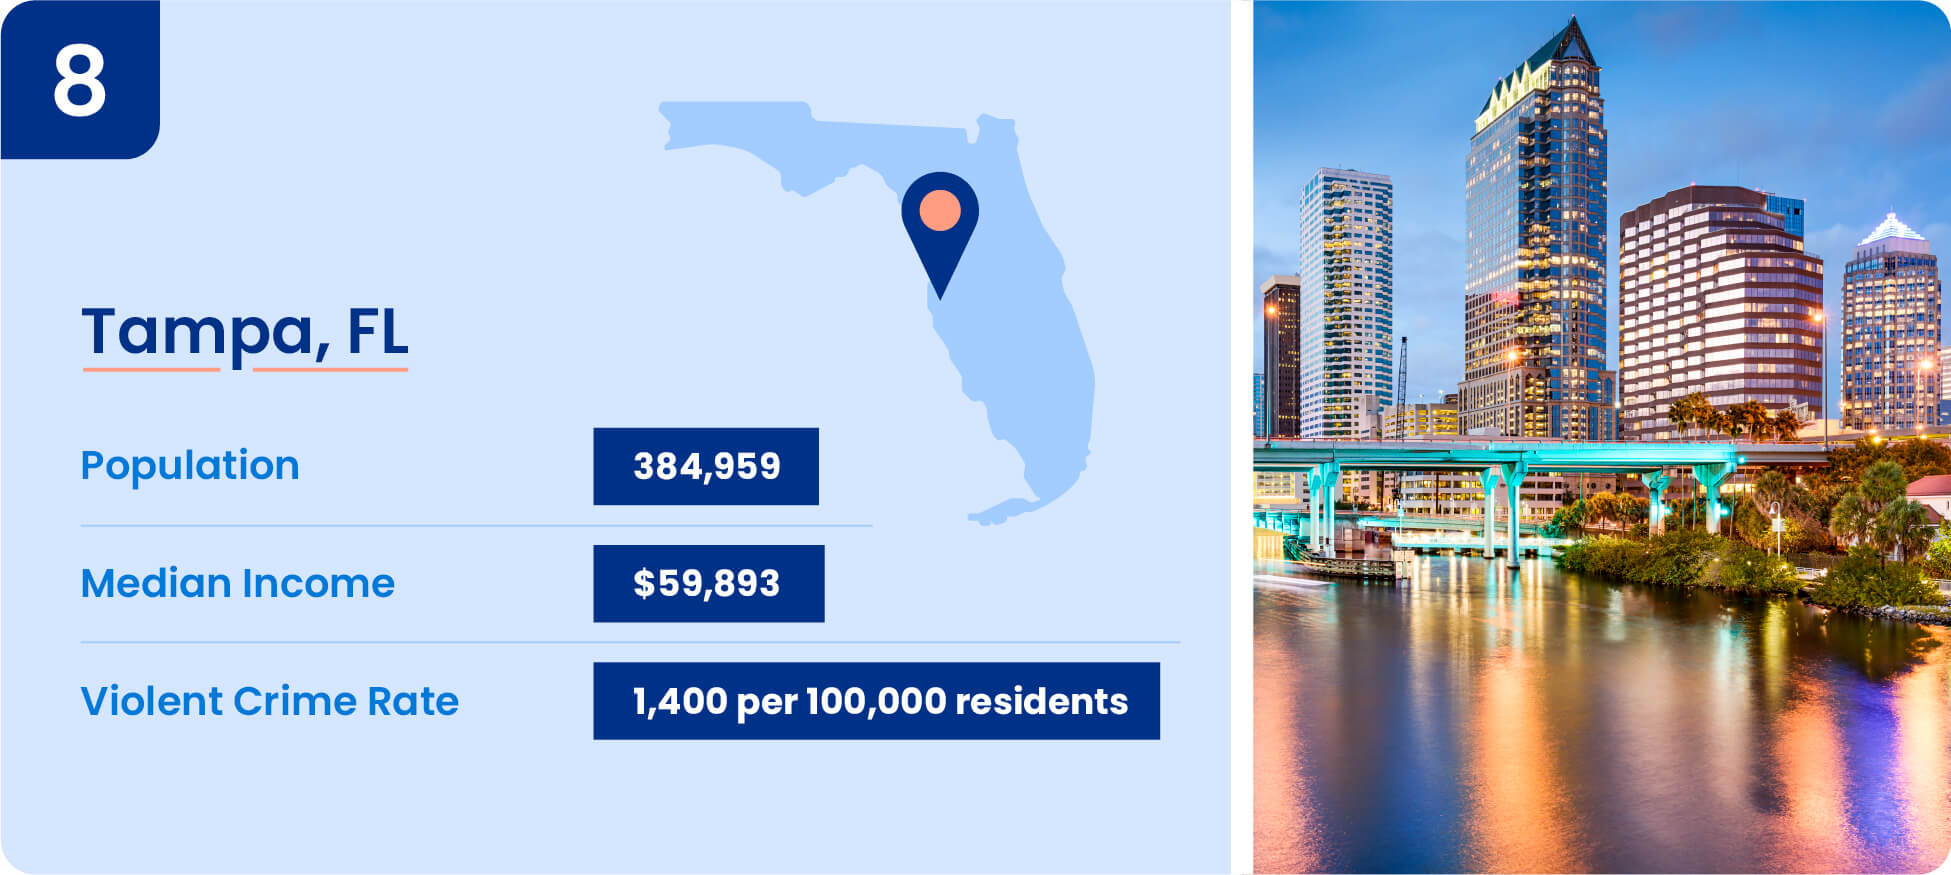 Image shows safety data including median income, population, and violent crime rate for Tampa, Florida.